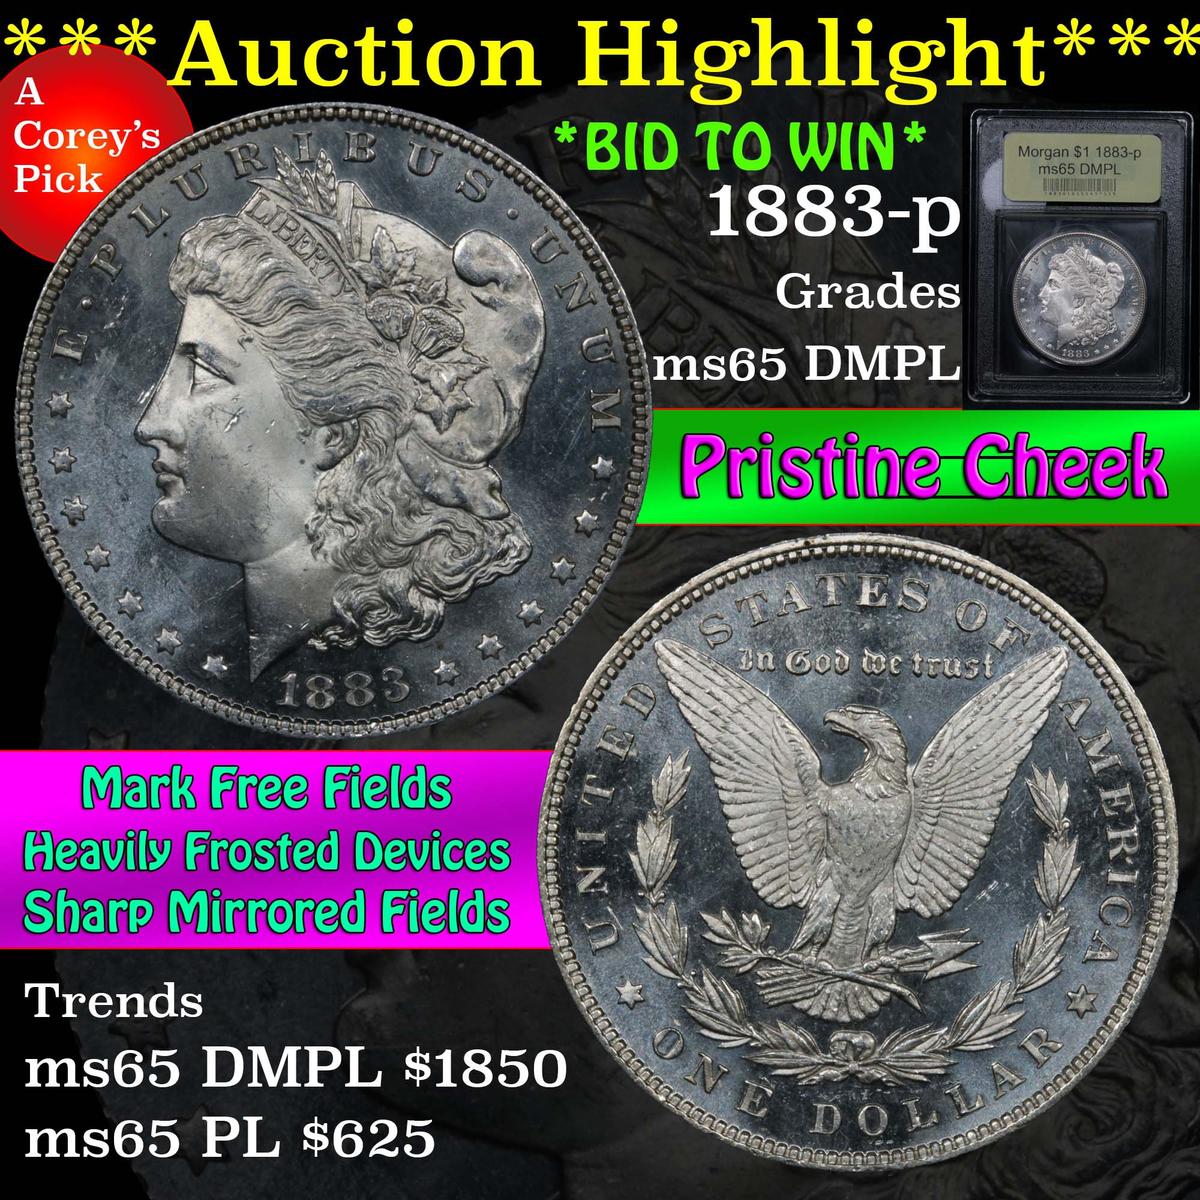 ***Auction Highlight*** 1883-p Morgan Dollar $1 Graded GEM Unc DMPL By USCG (fc)